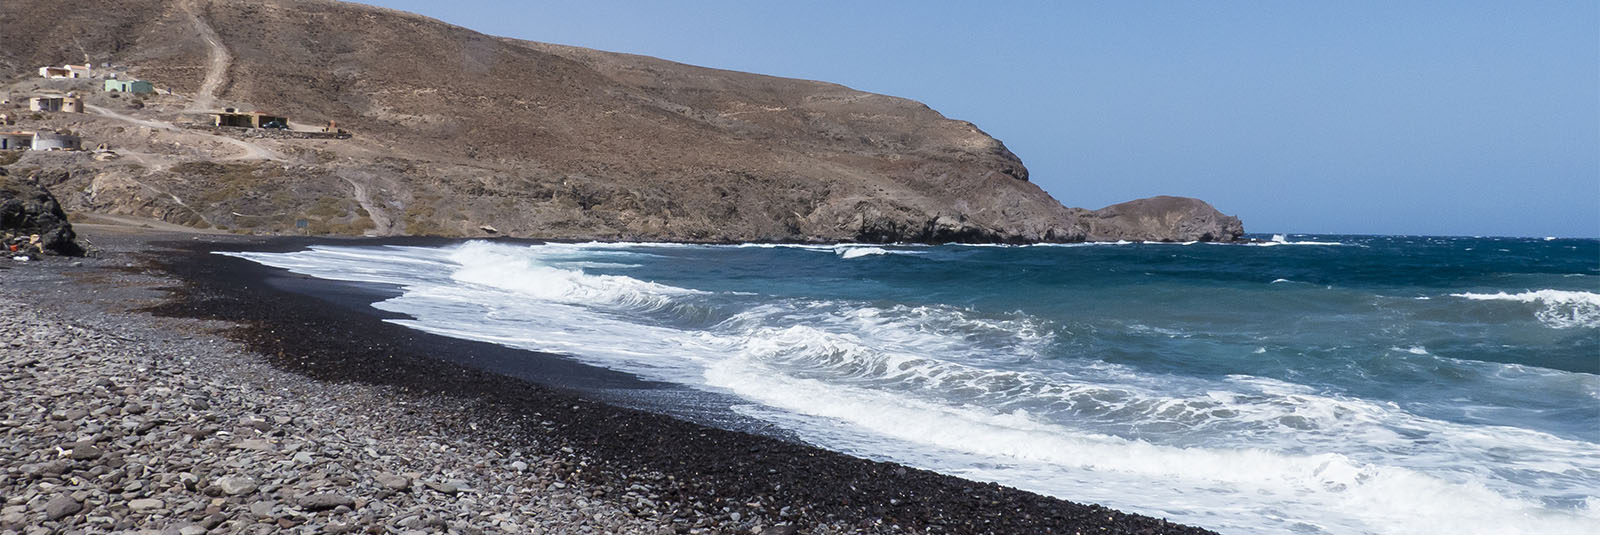 Die Strände Fuerteventuras: Ensenada de Gran Valle.